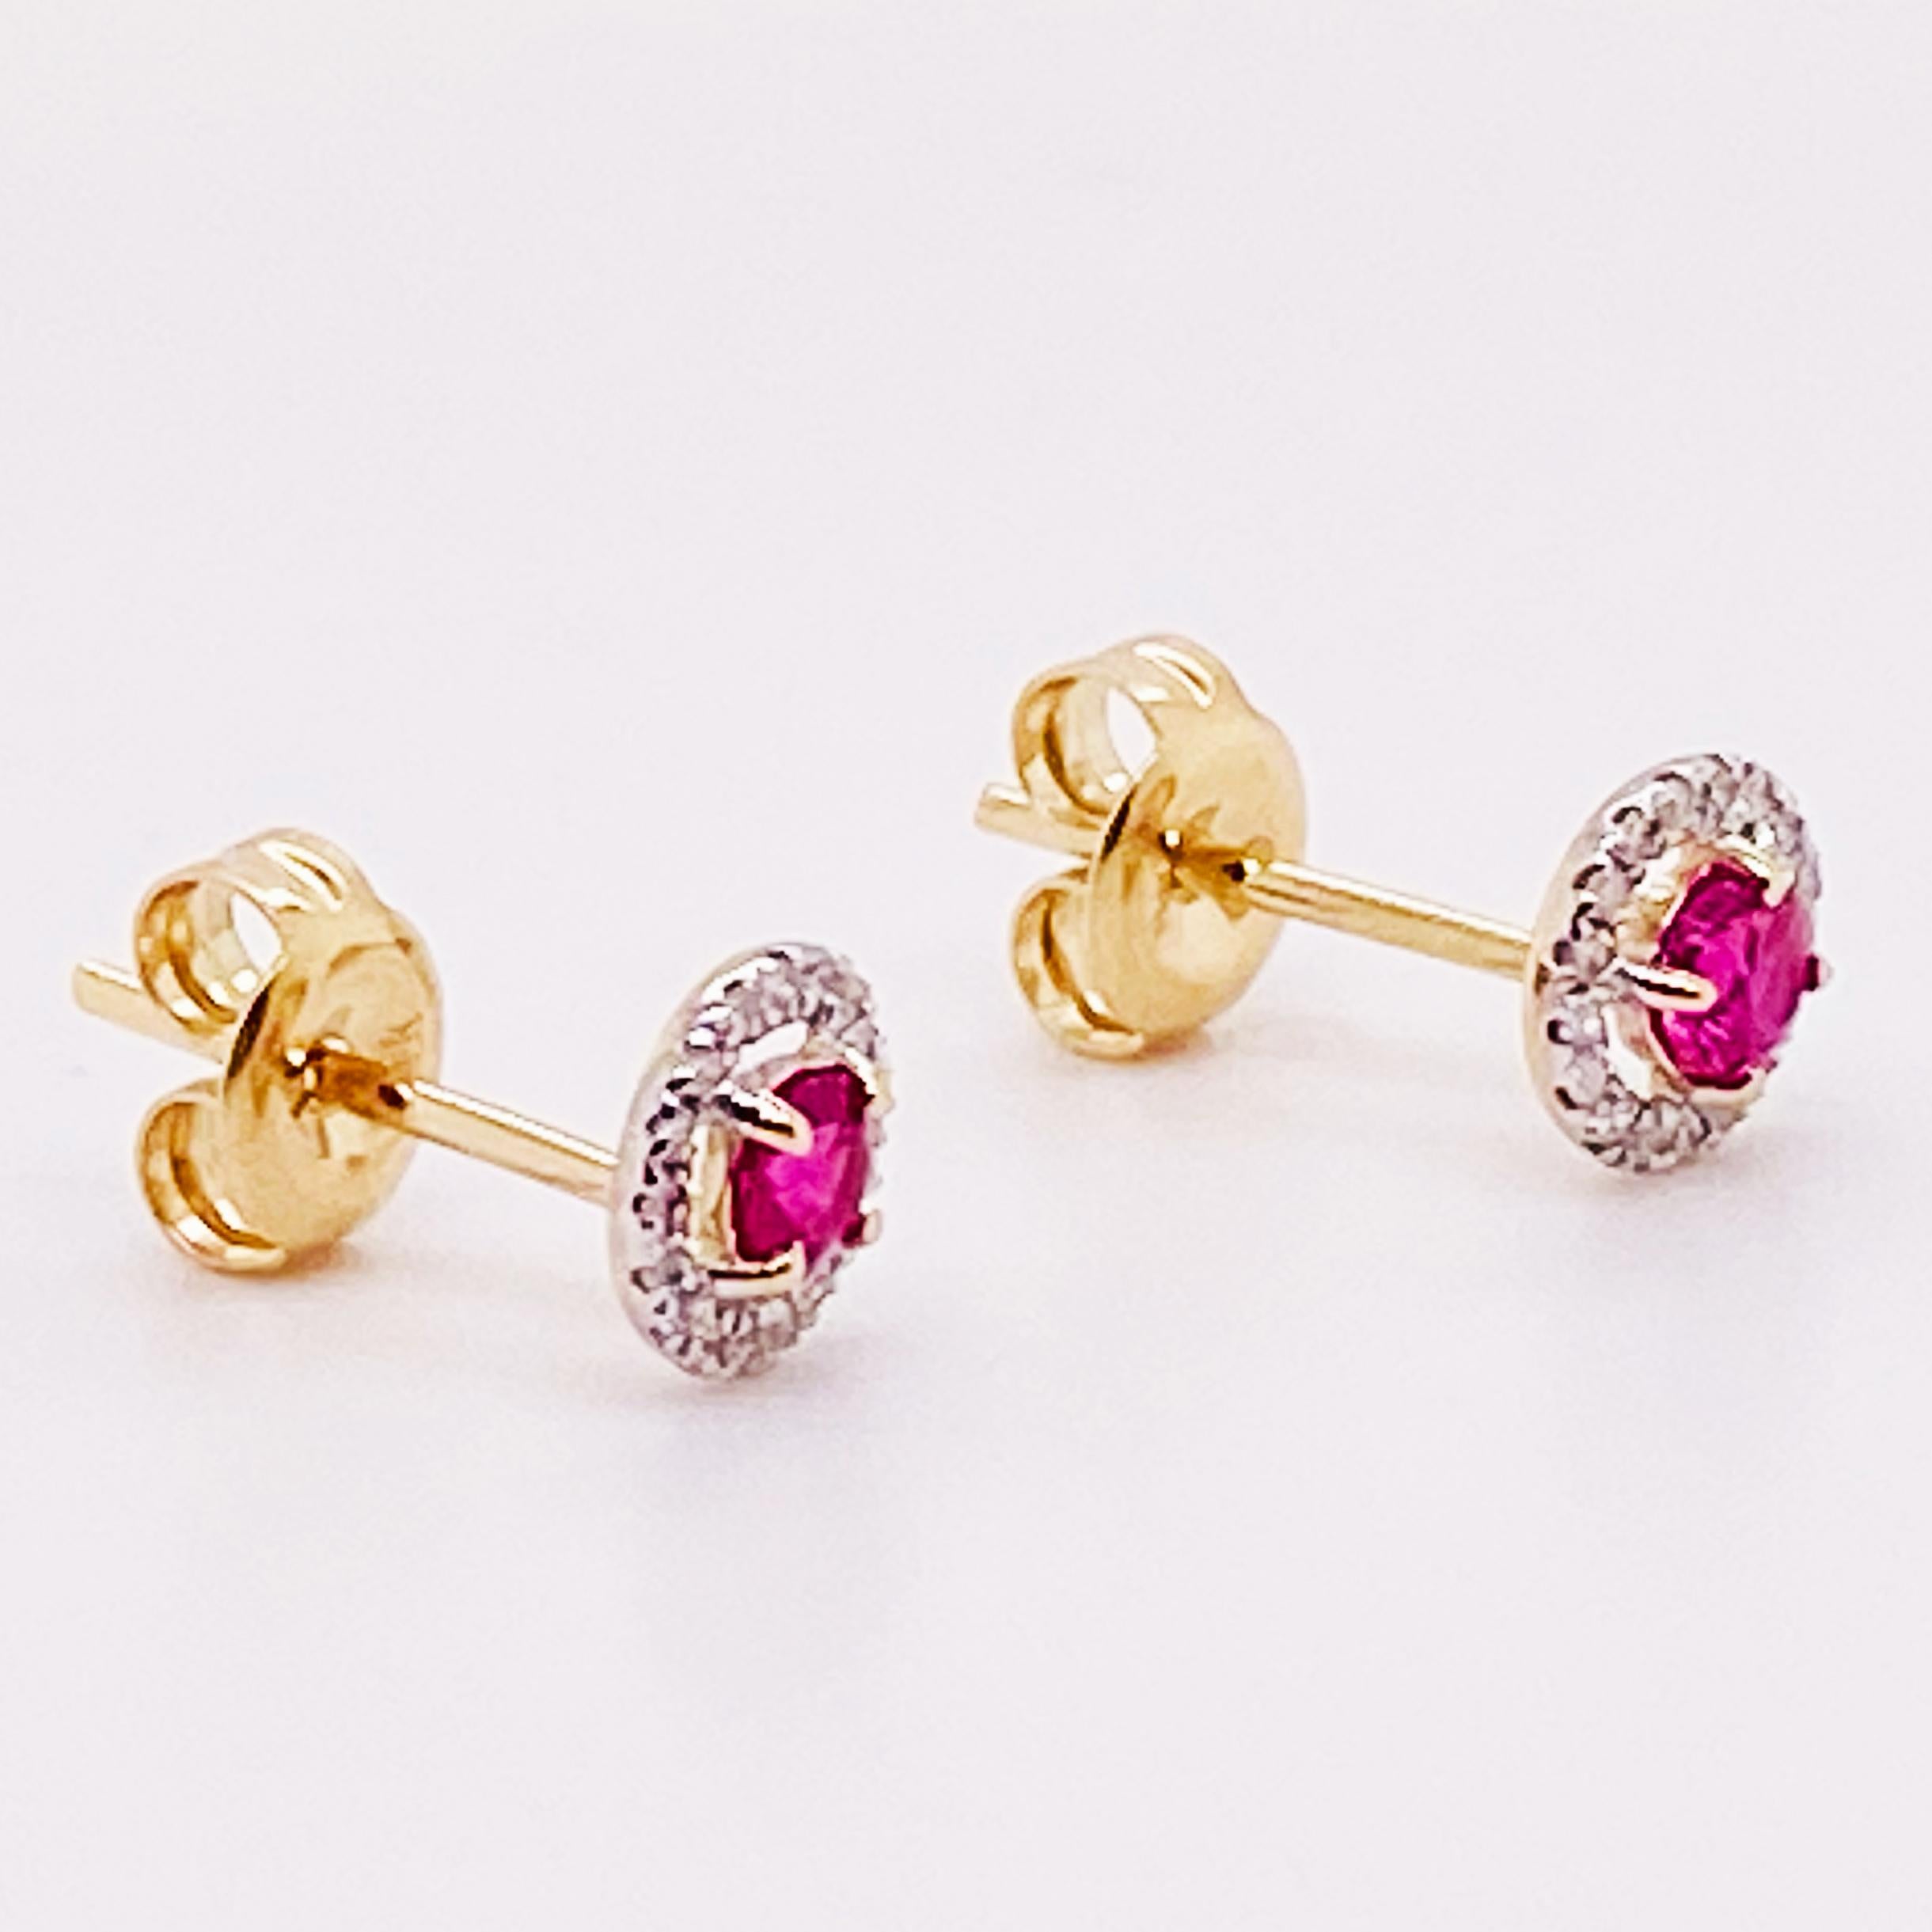 Round Cut Ruby & Diamond Halo Earrings 14K Gold July Ruby Earring Studs, Minimalist Post For Sale